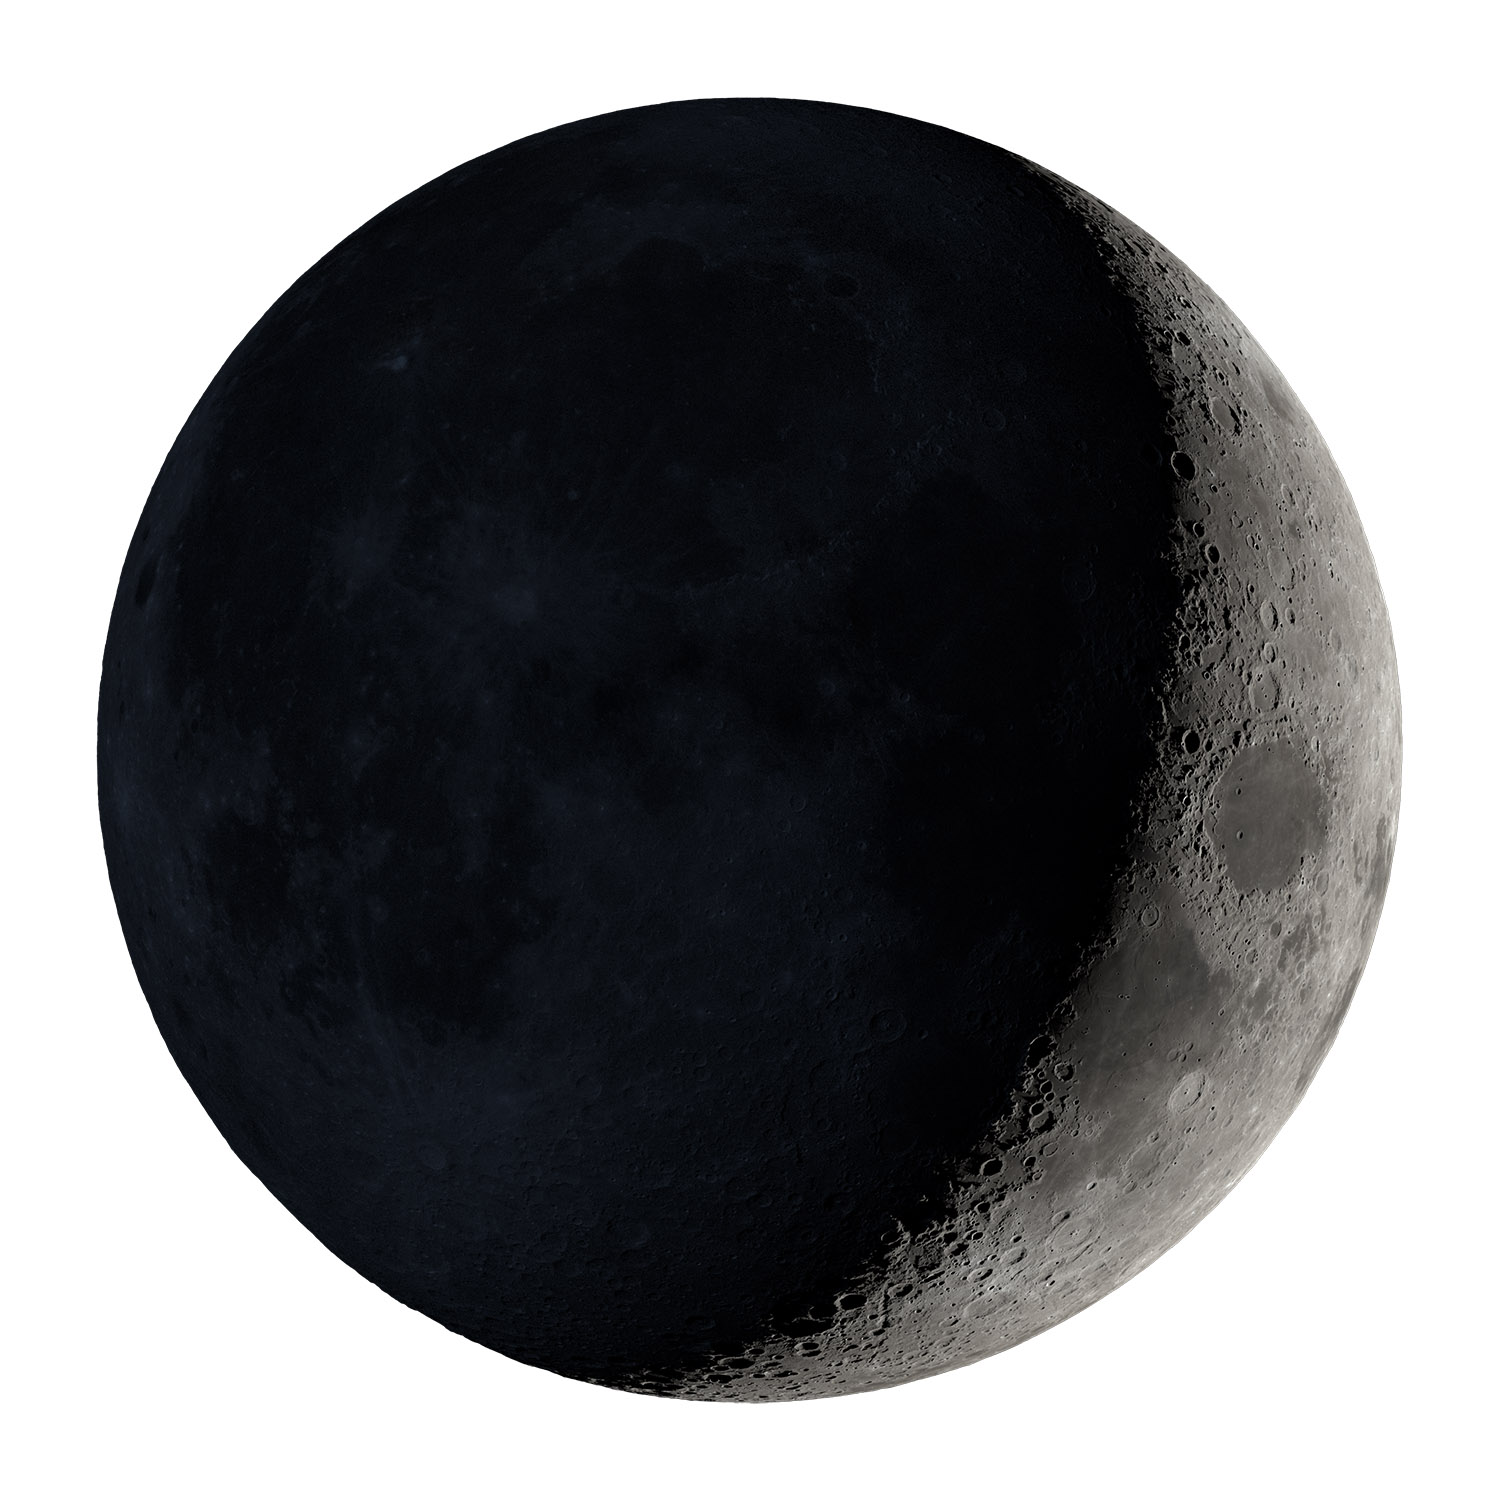 phase waxing crescent moon.jpg